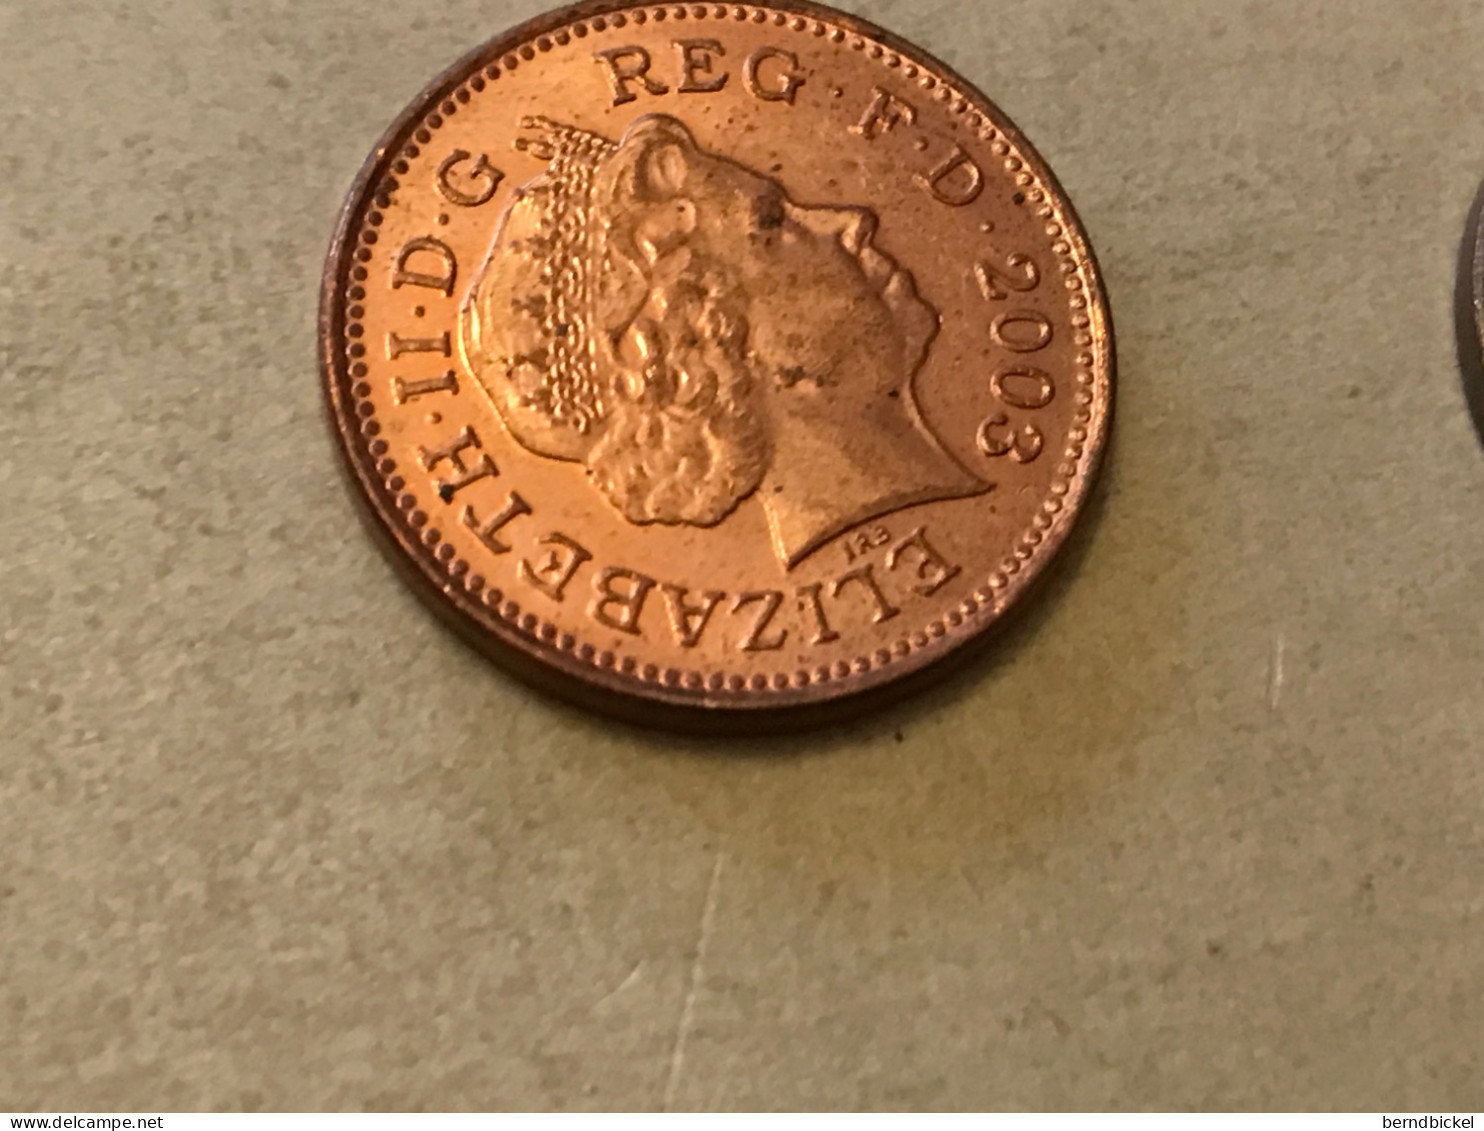 Münze Münzen Umlaufmünze Großbritannien 1 Penny 2003 - 1 Penny & 1 New Penny